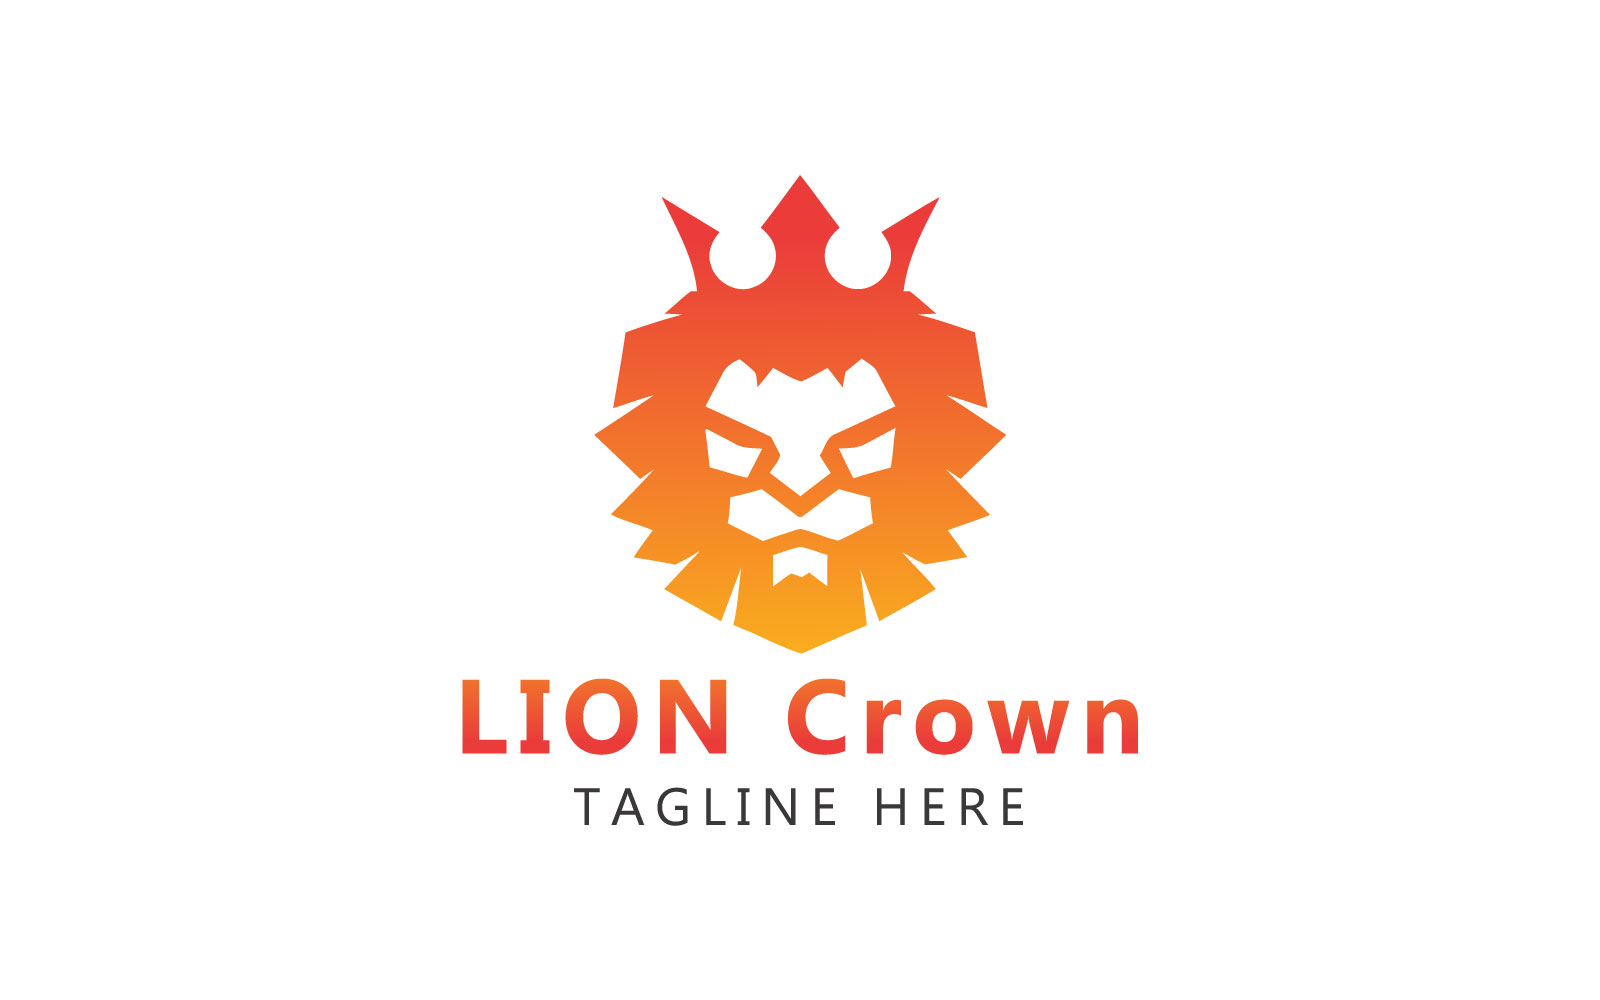 Royal lion shield logo stock vector. Illustration of brand - 226914617